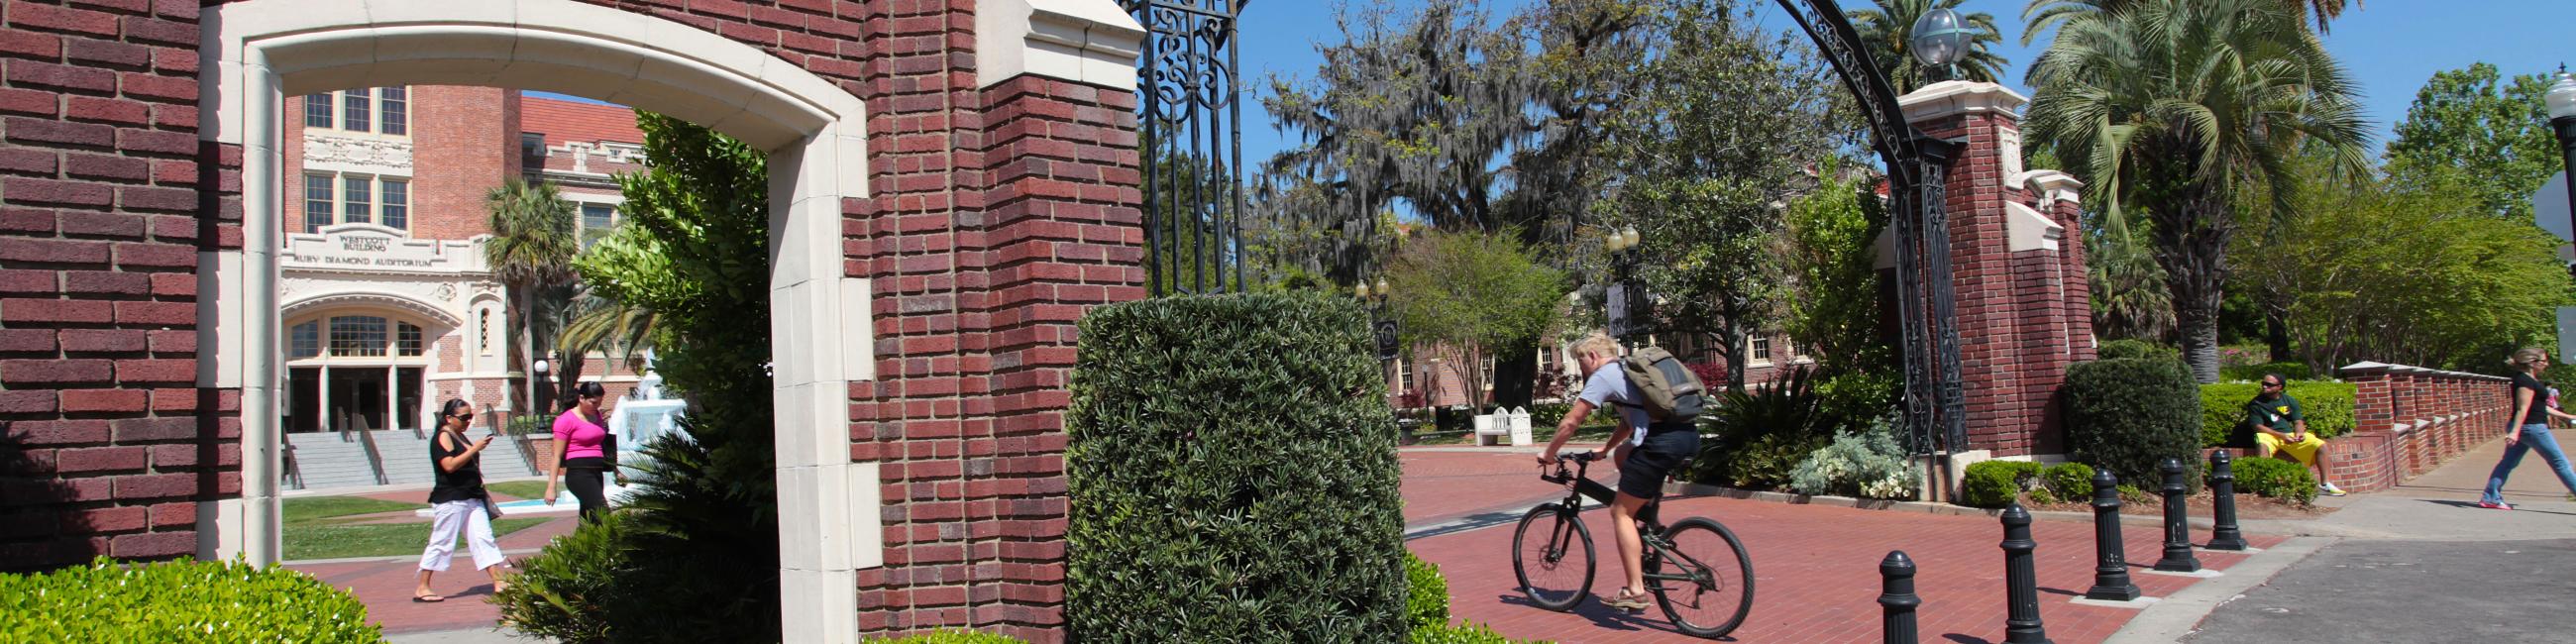 Image of the entrance of Florida State University.